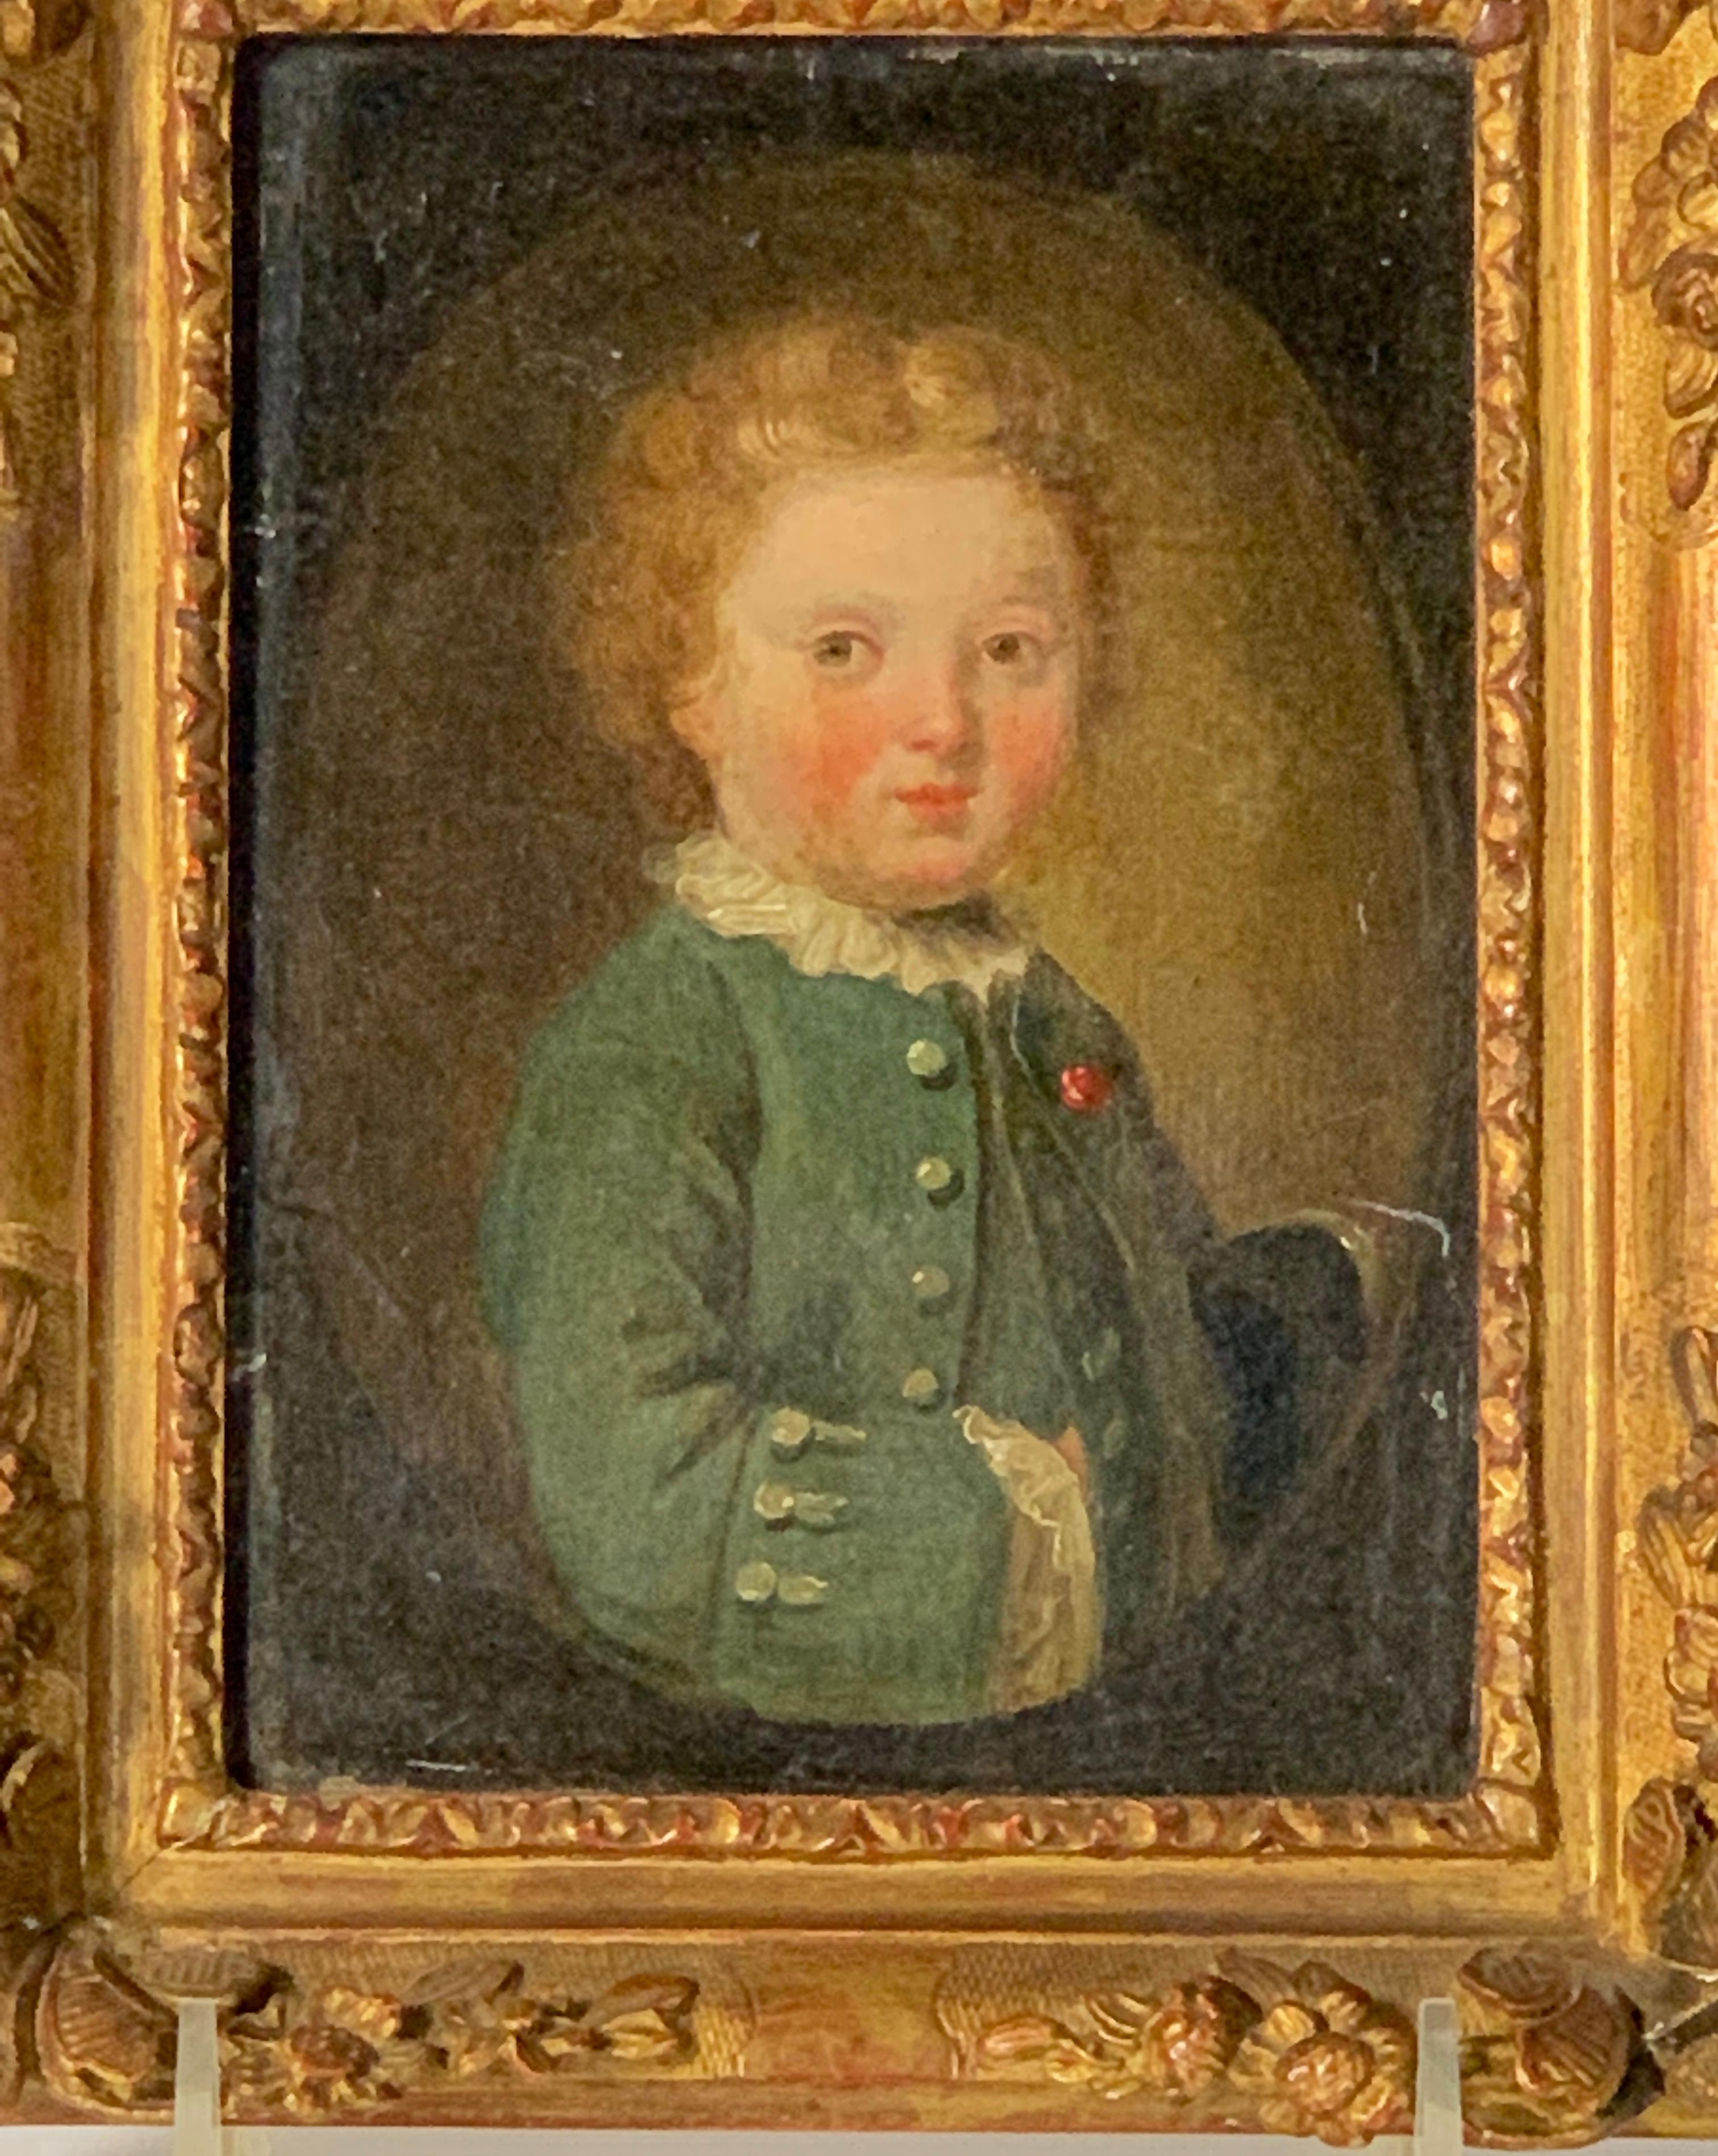 portrait of a boy